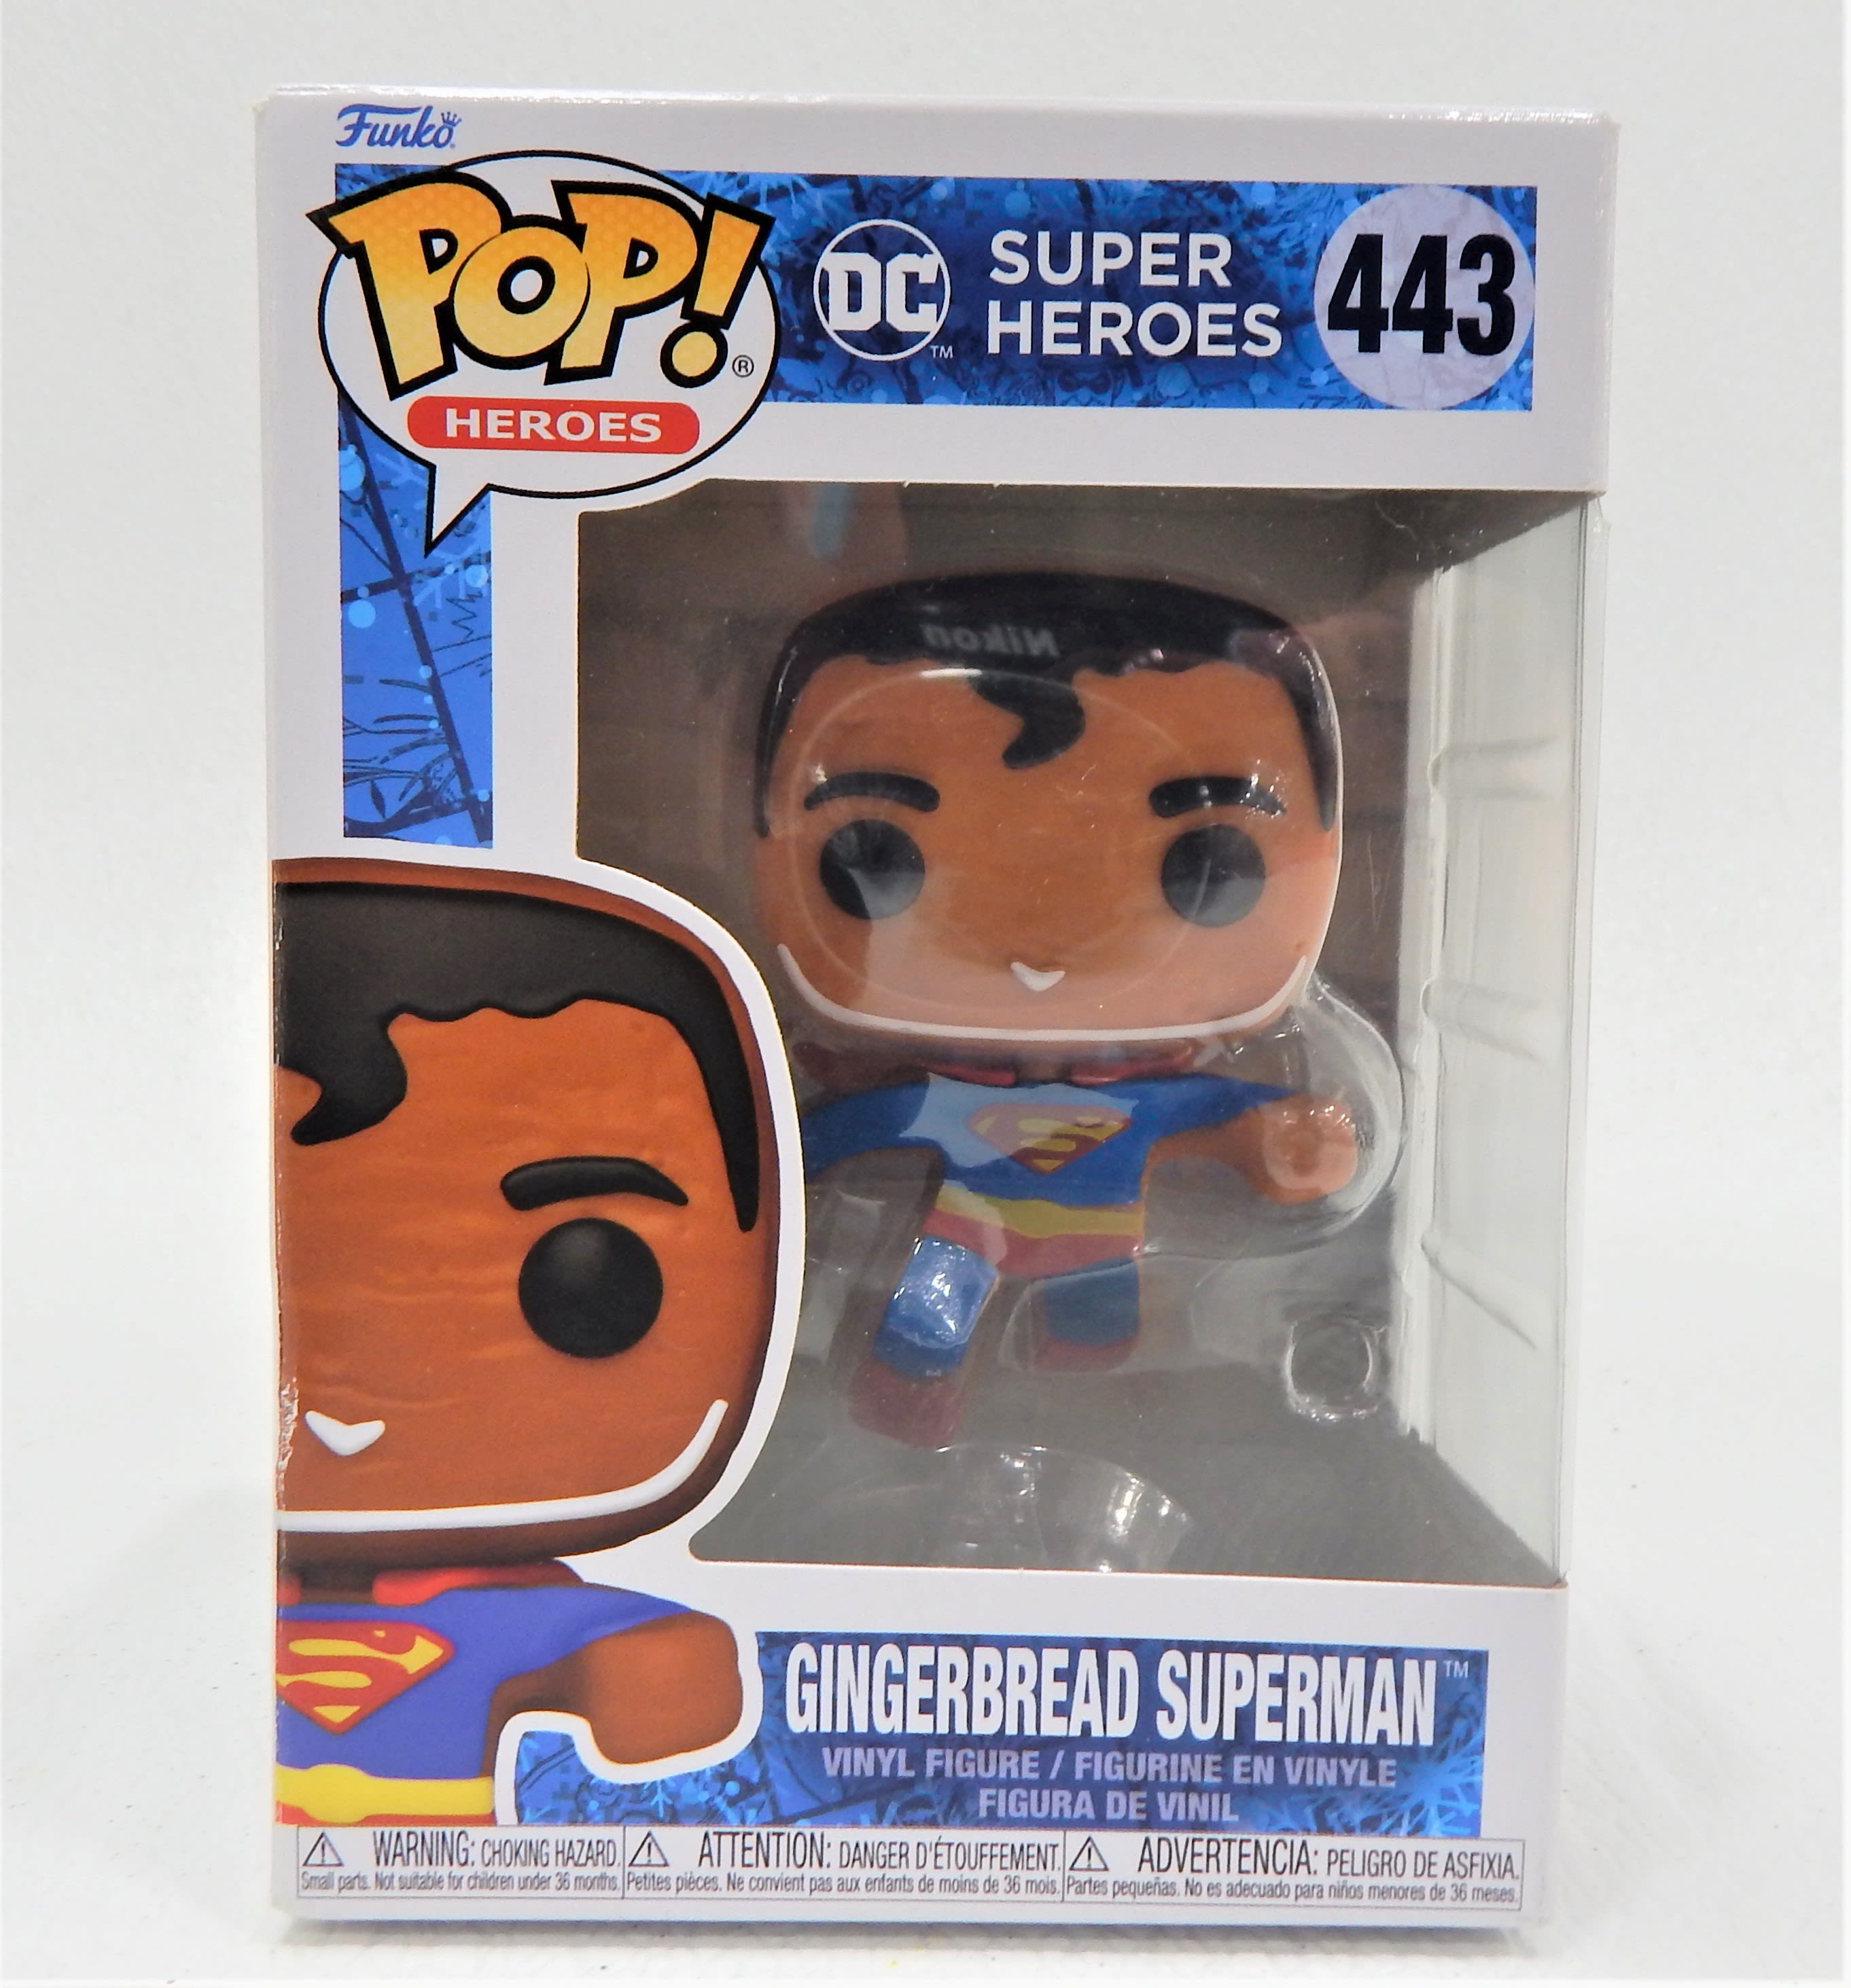 Figurine Superman Super Oversized / Superman / Funko Pop Heroes